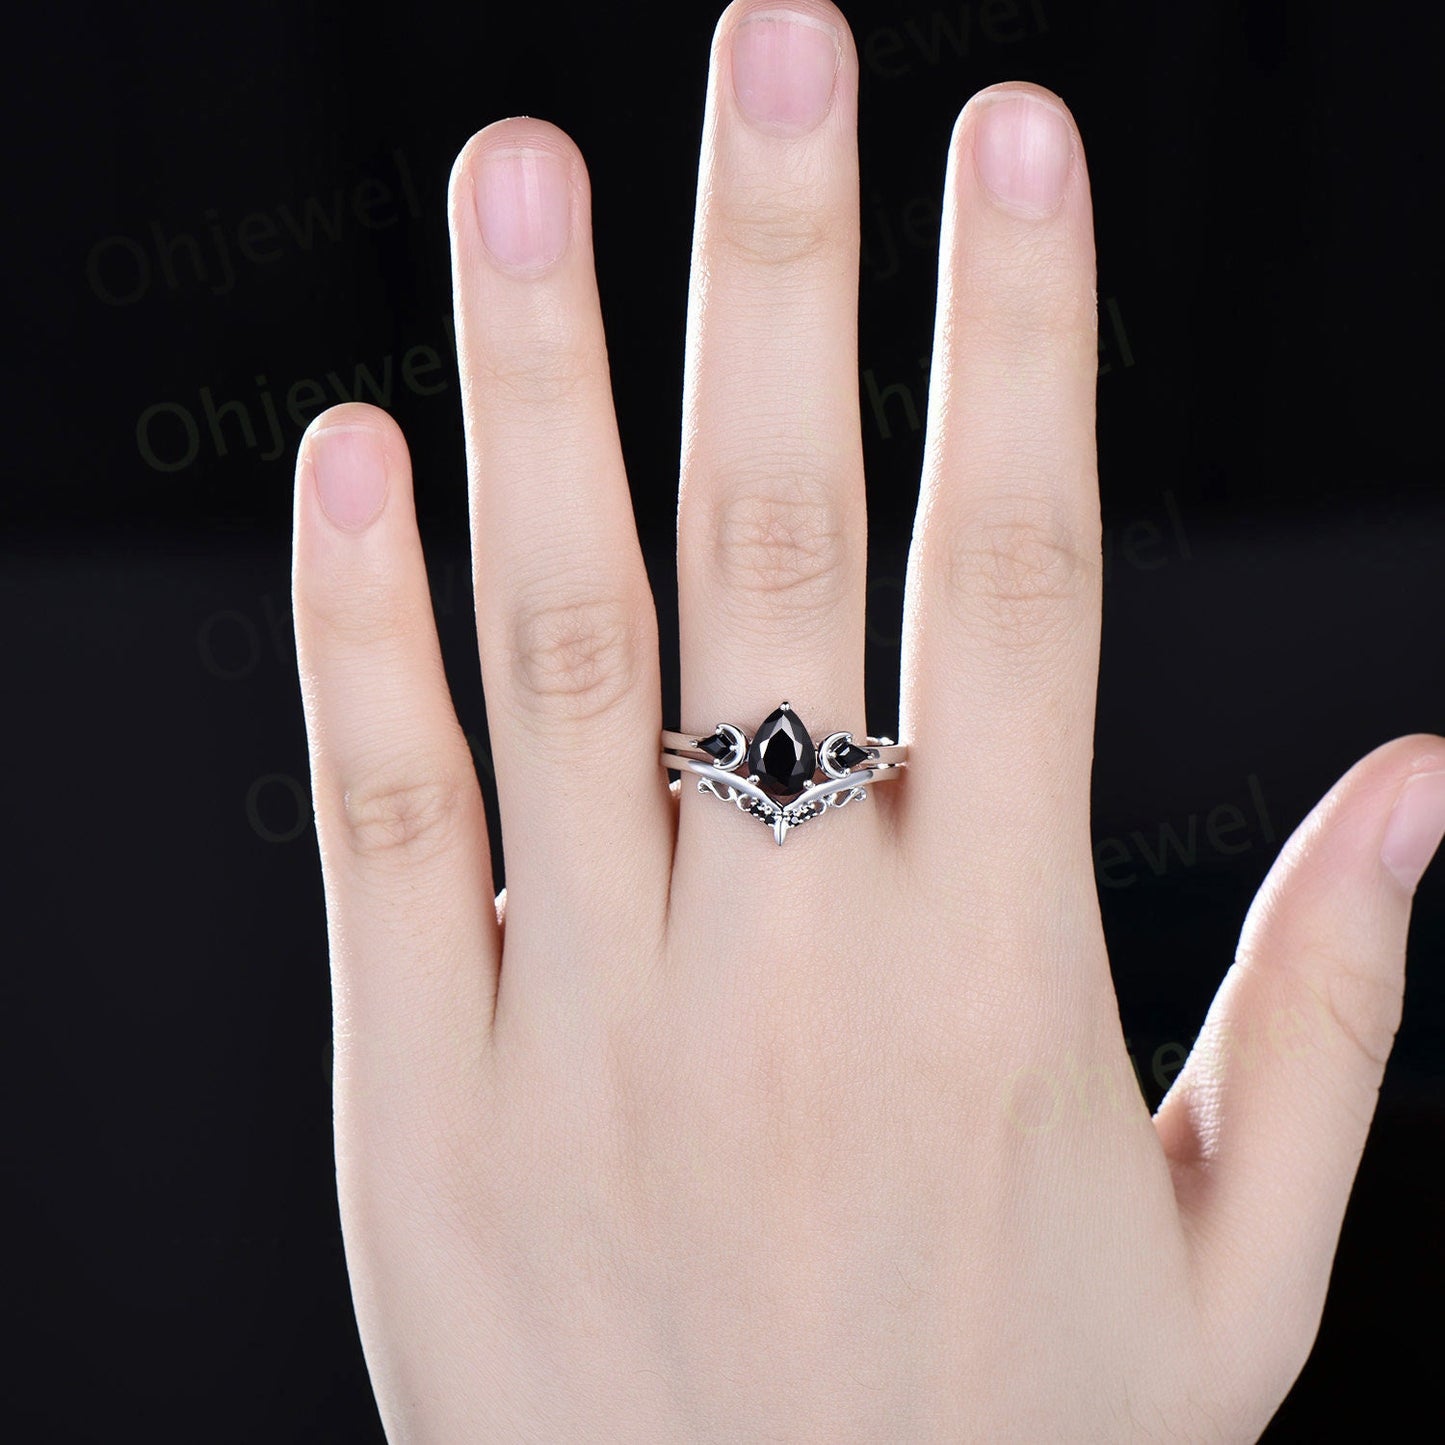 Pear shaped black onyx ring vintage three stone kite black spinel moon ring set white gold unique engagement ring antique bridal set women